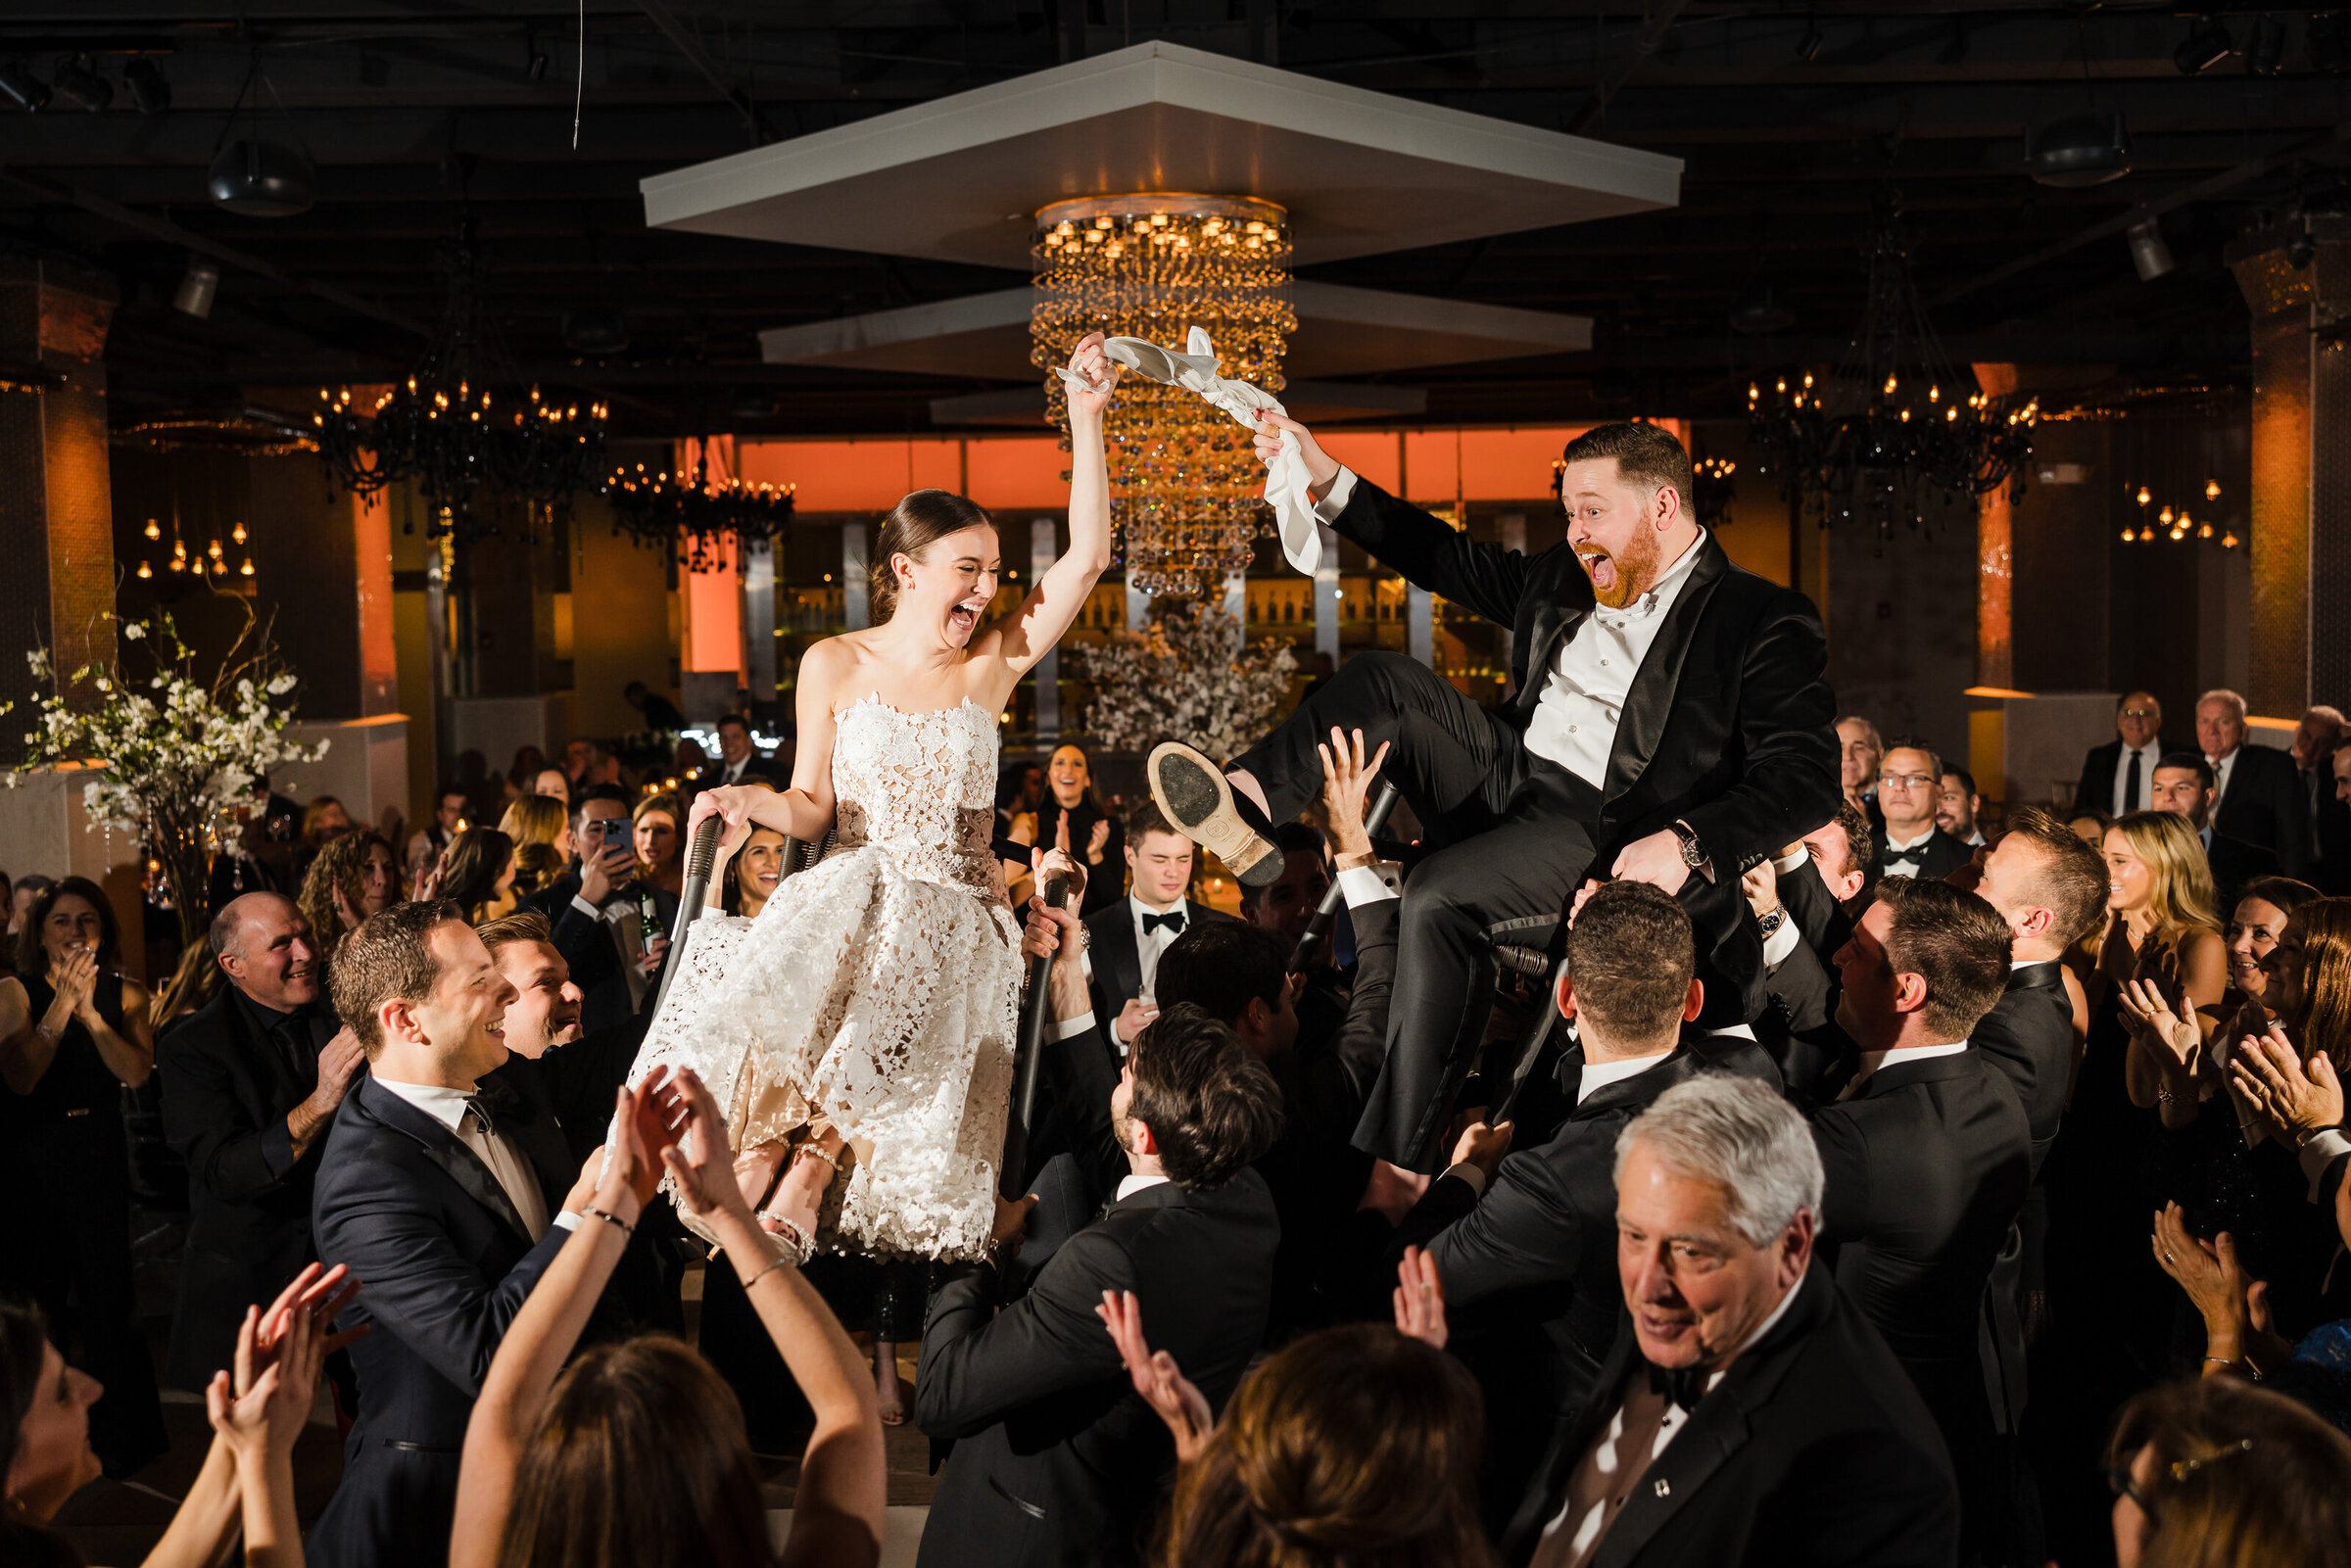 Hora at Jewish wedding reception at Tendenza captured by Anastasia Romanova